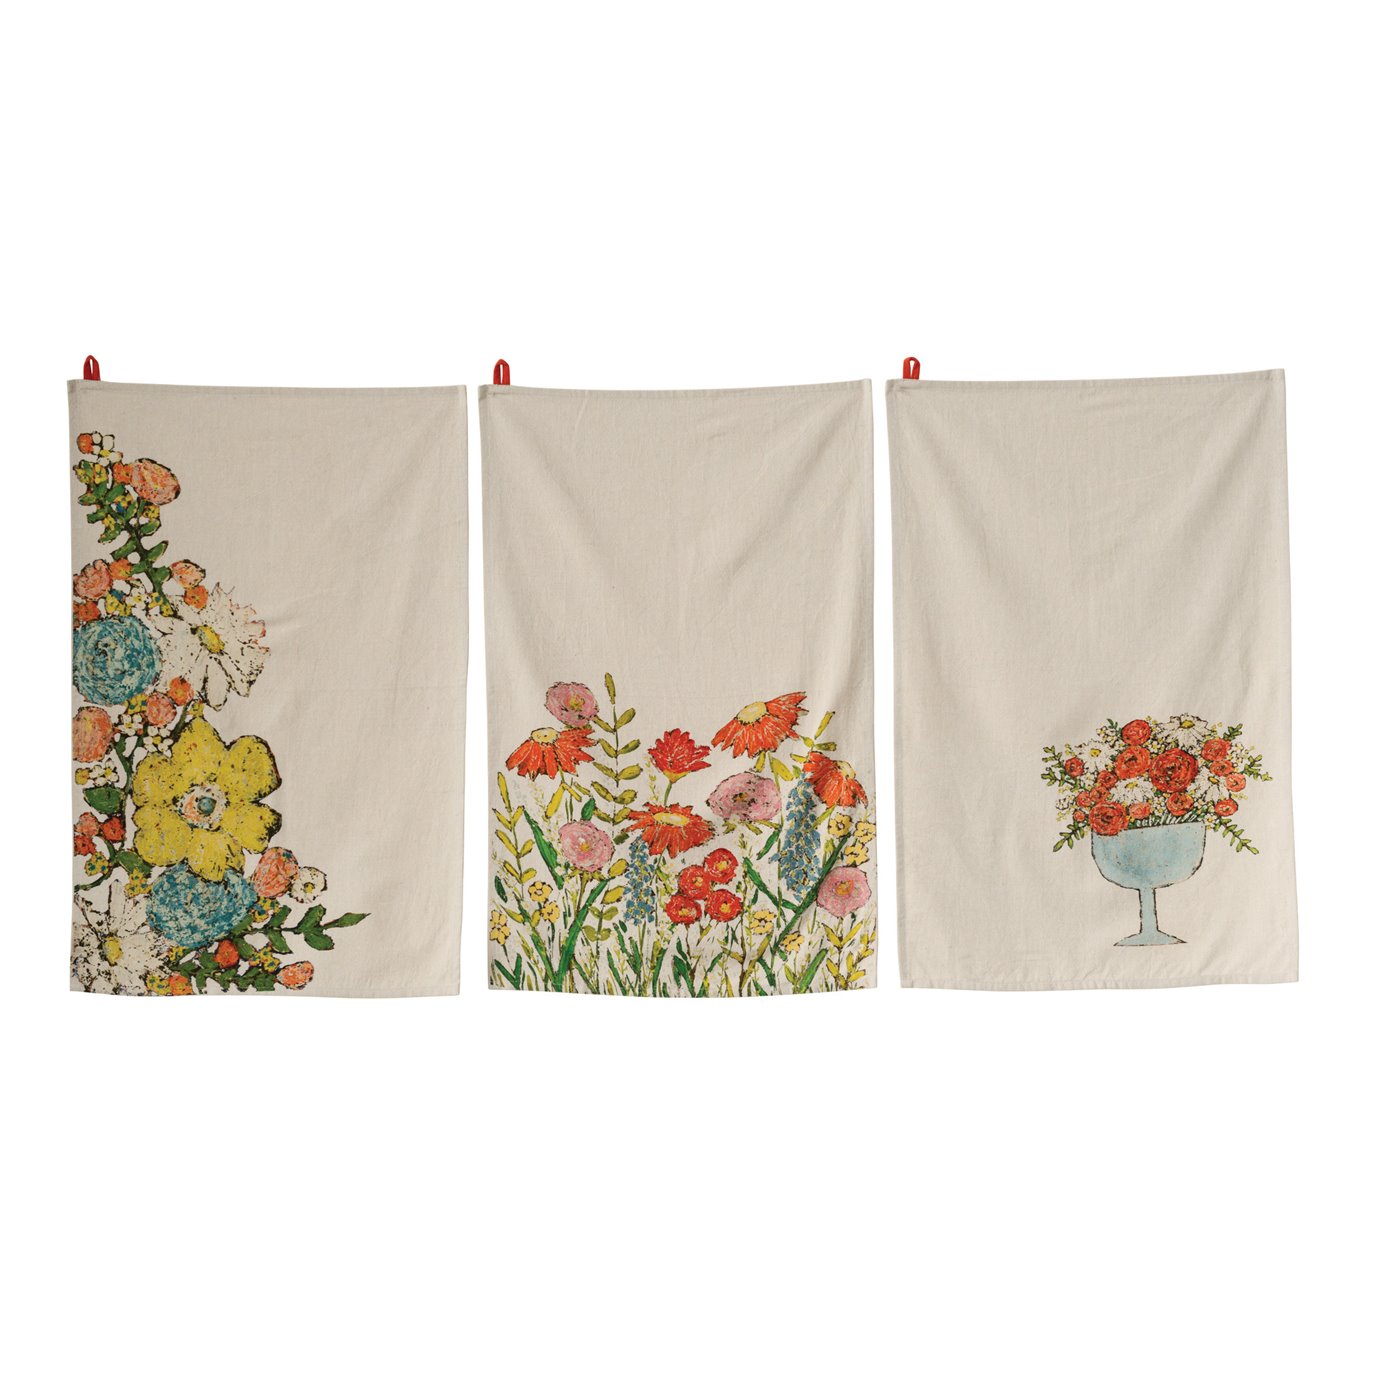 Cotton Tea Towels with Floral Images (Set of 3 Designs)